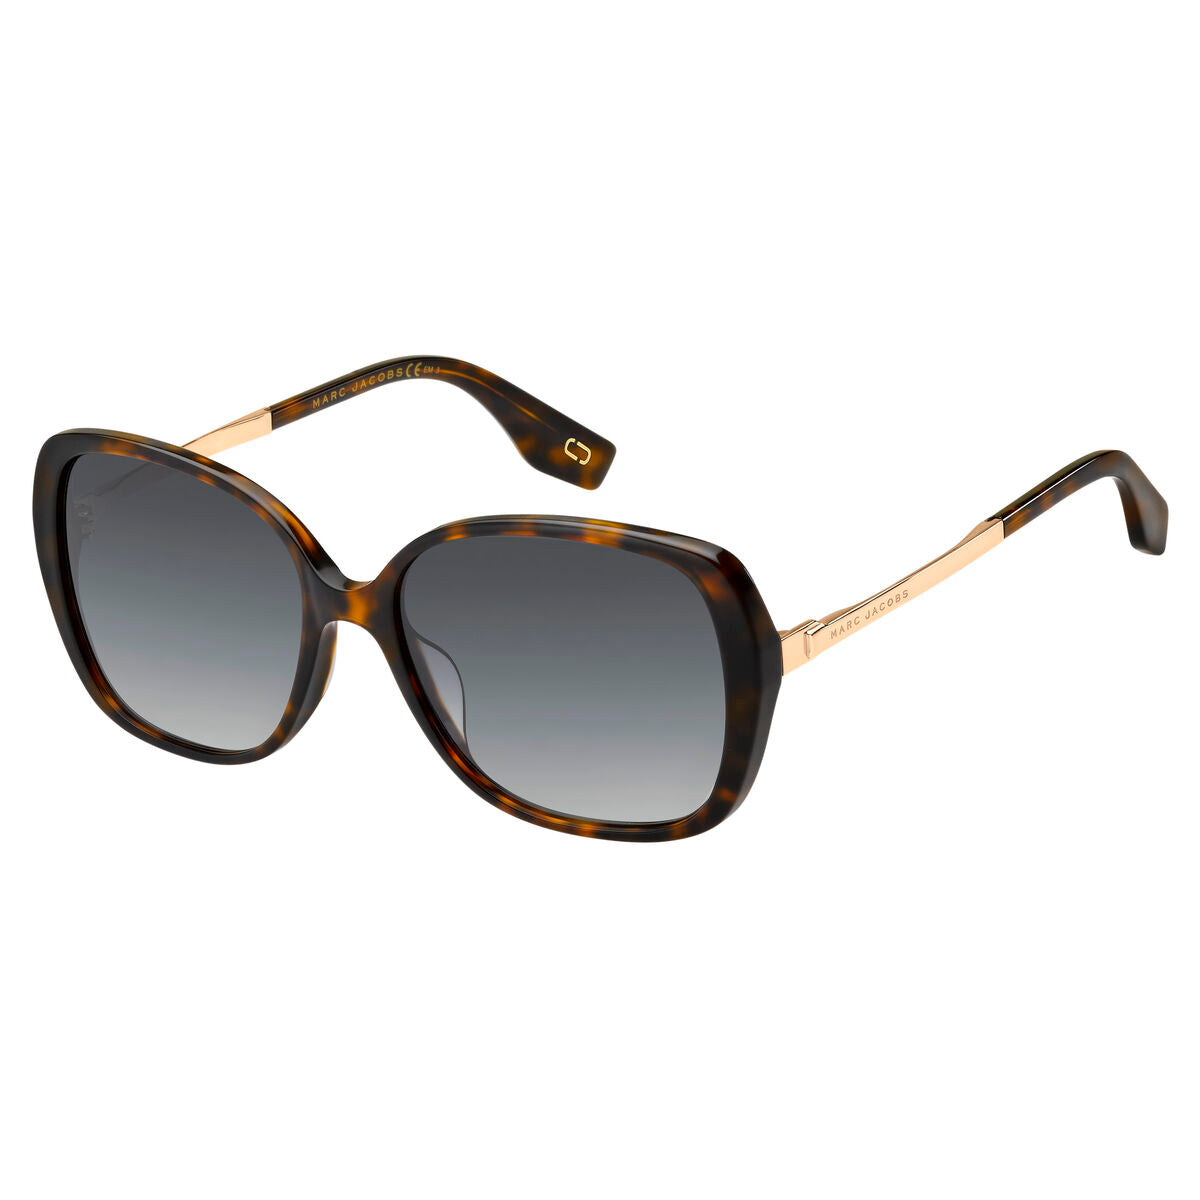 Ladies' Sunglasses Marc Jacobs MARC-304-S-086-9O